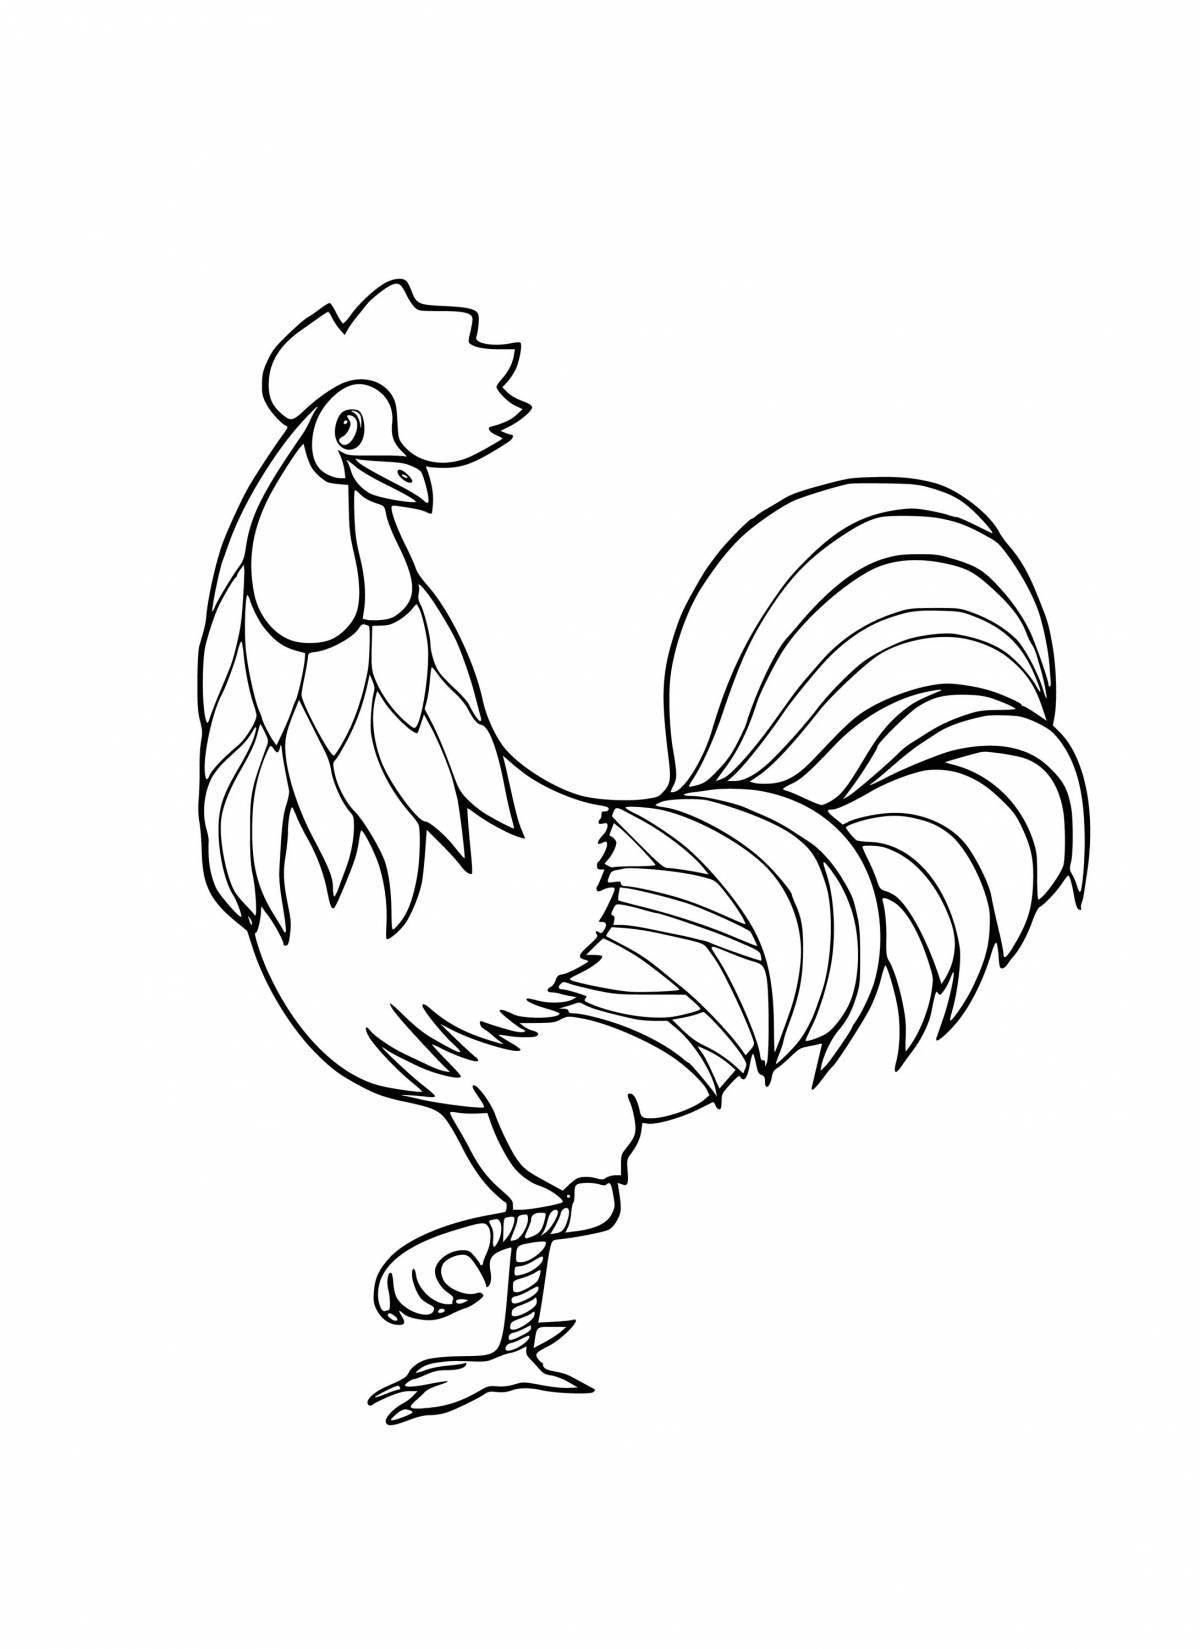 Joyful cockerel drawing for kids